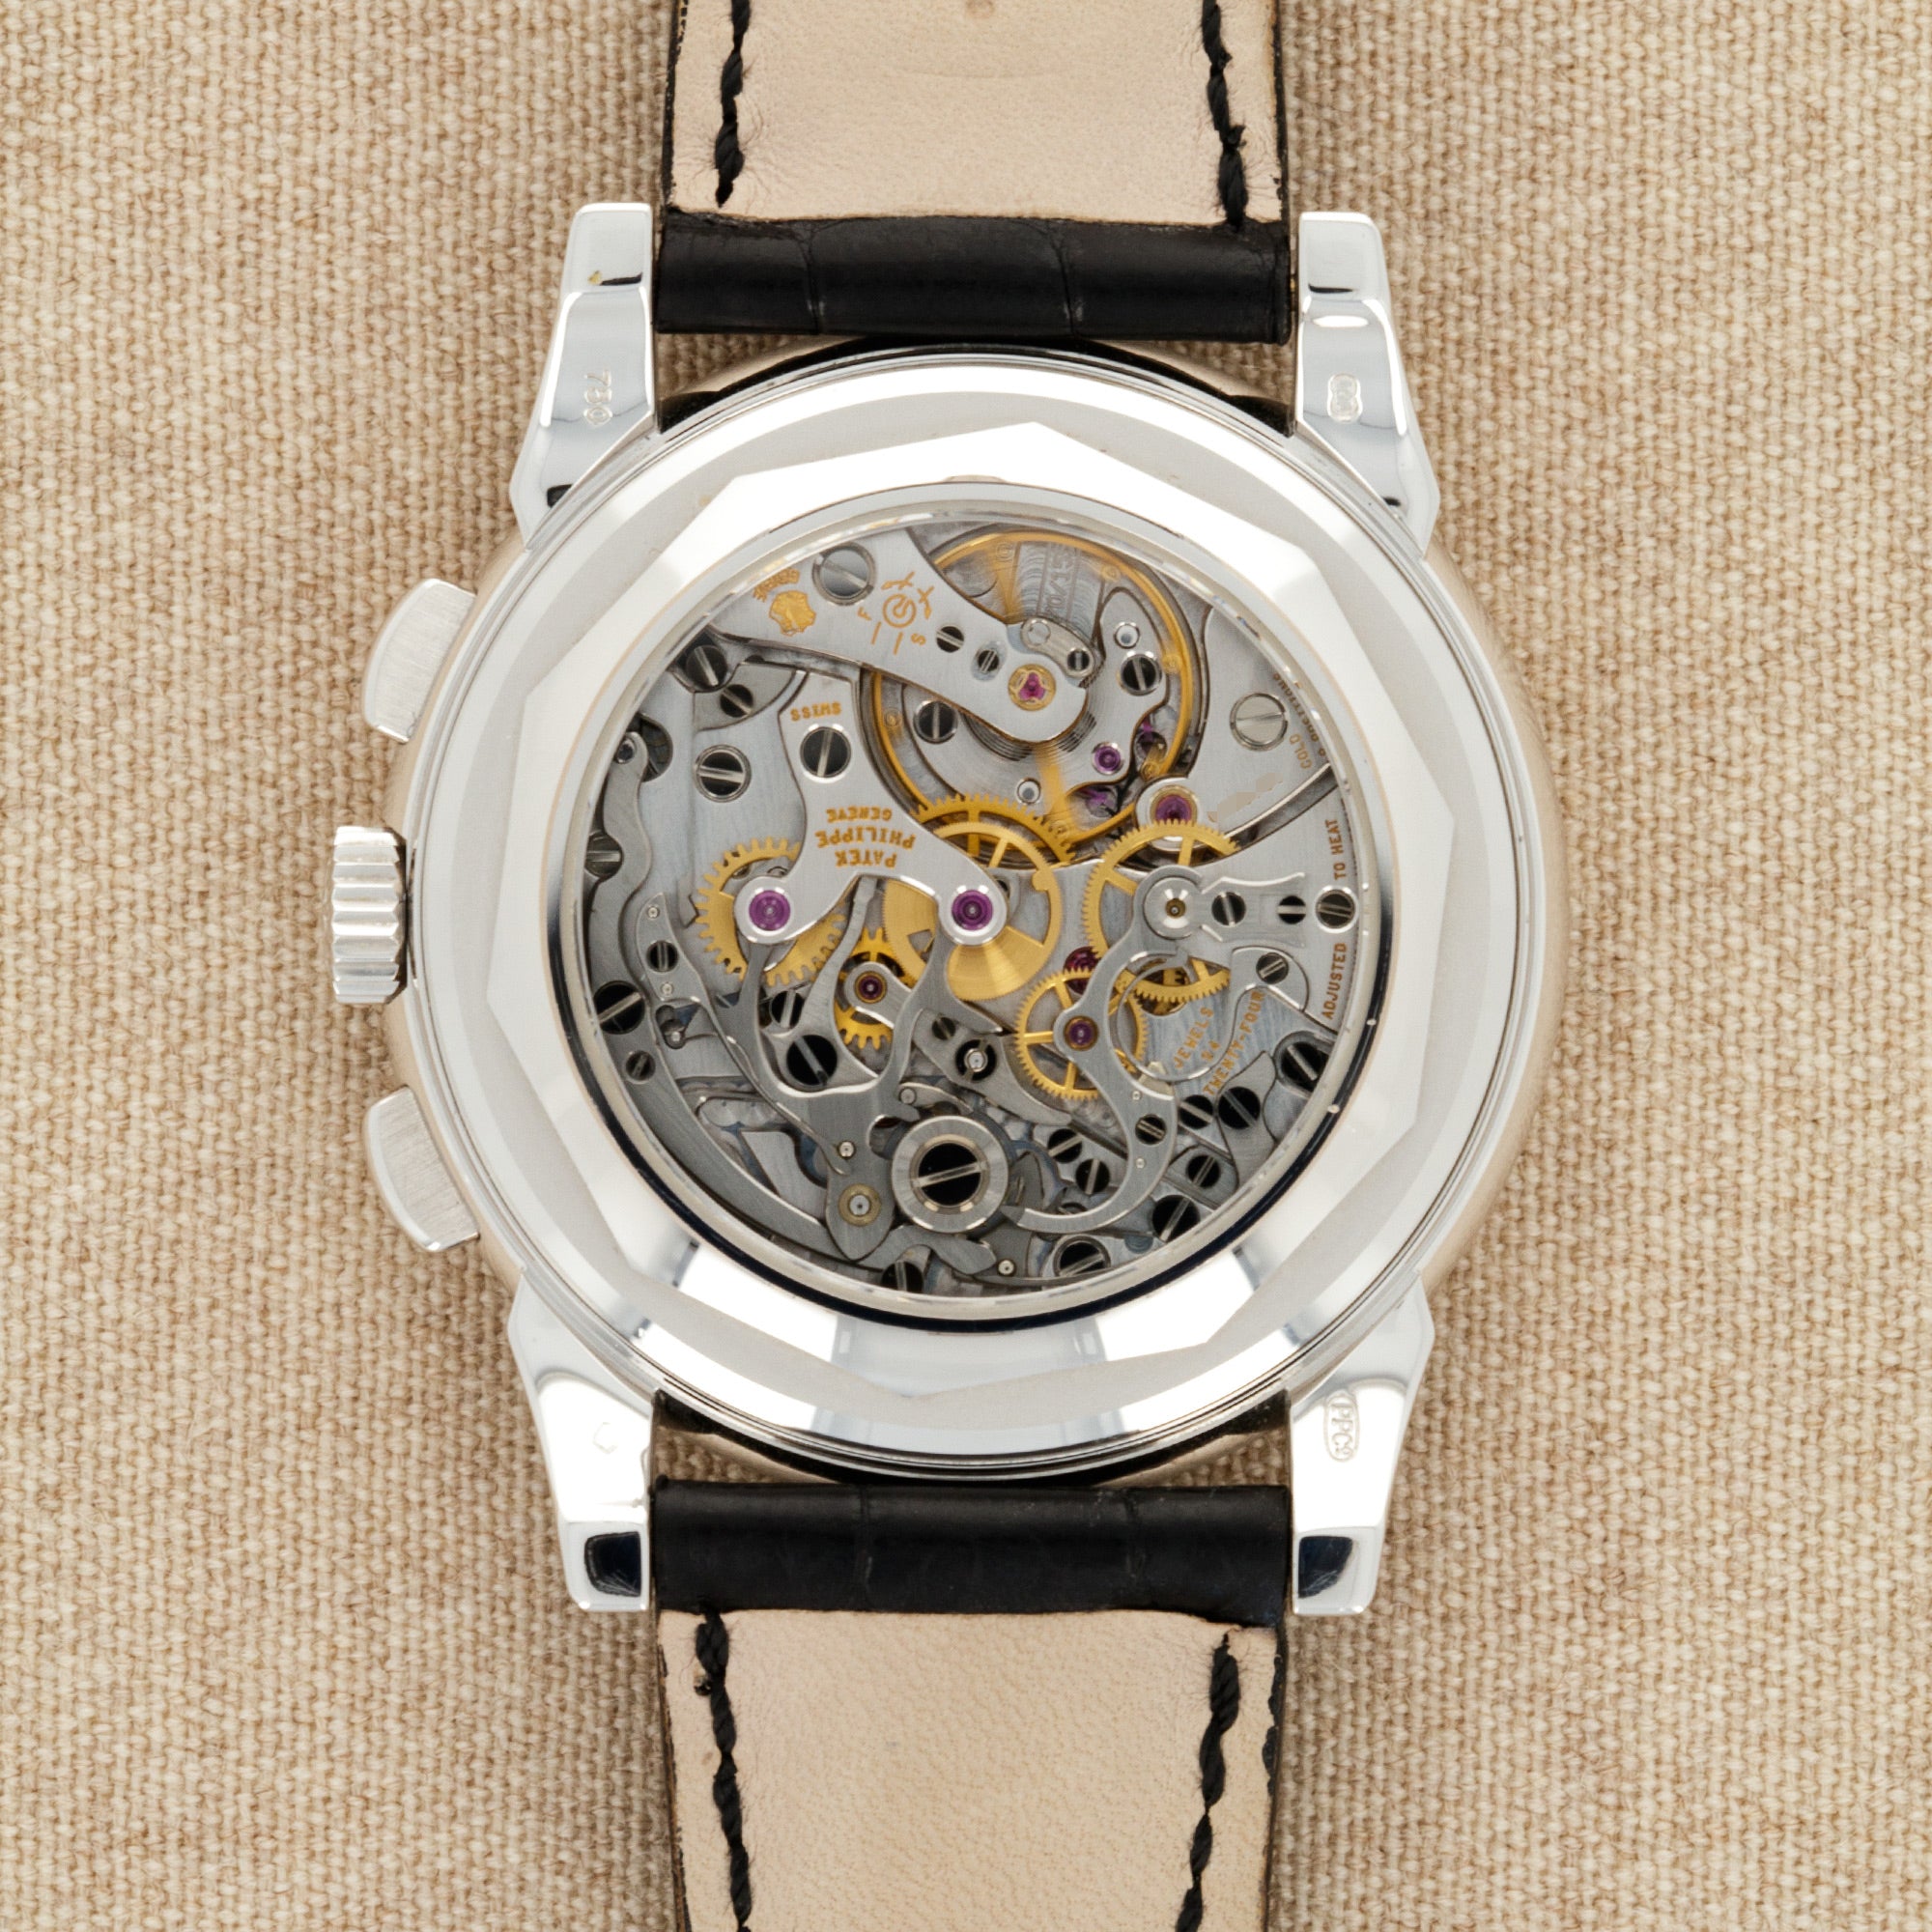 Patek Philippe - Patek Philippe White Gold Perpetual Calendar Chronograph Watch Ref. 5970 - The Keystone Watches